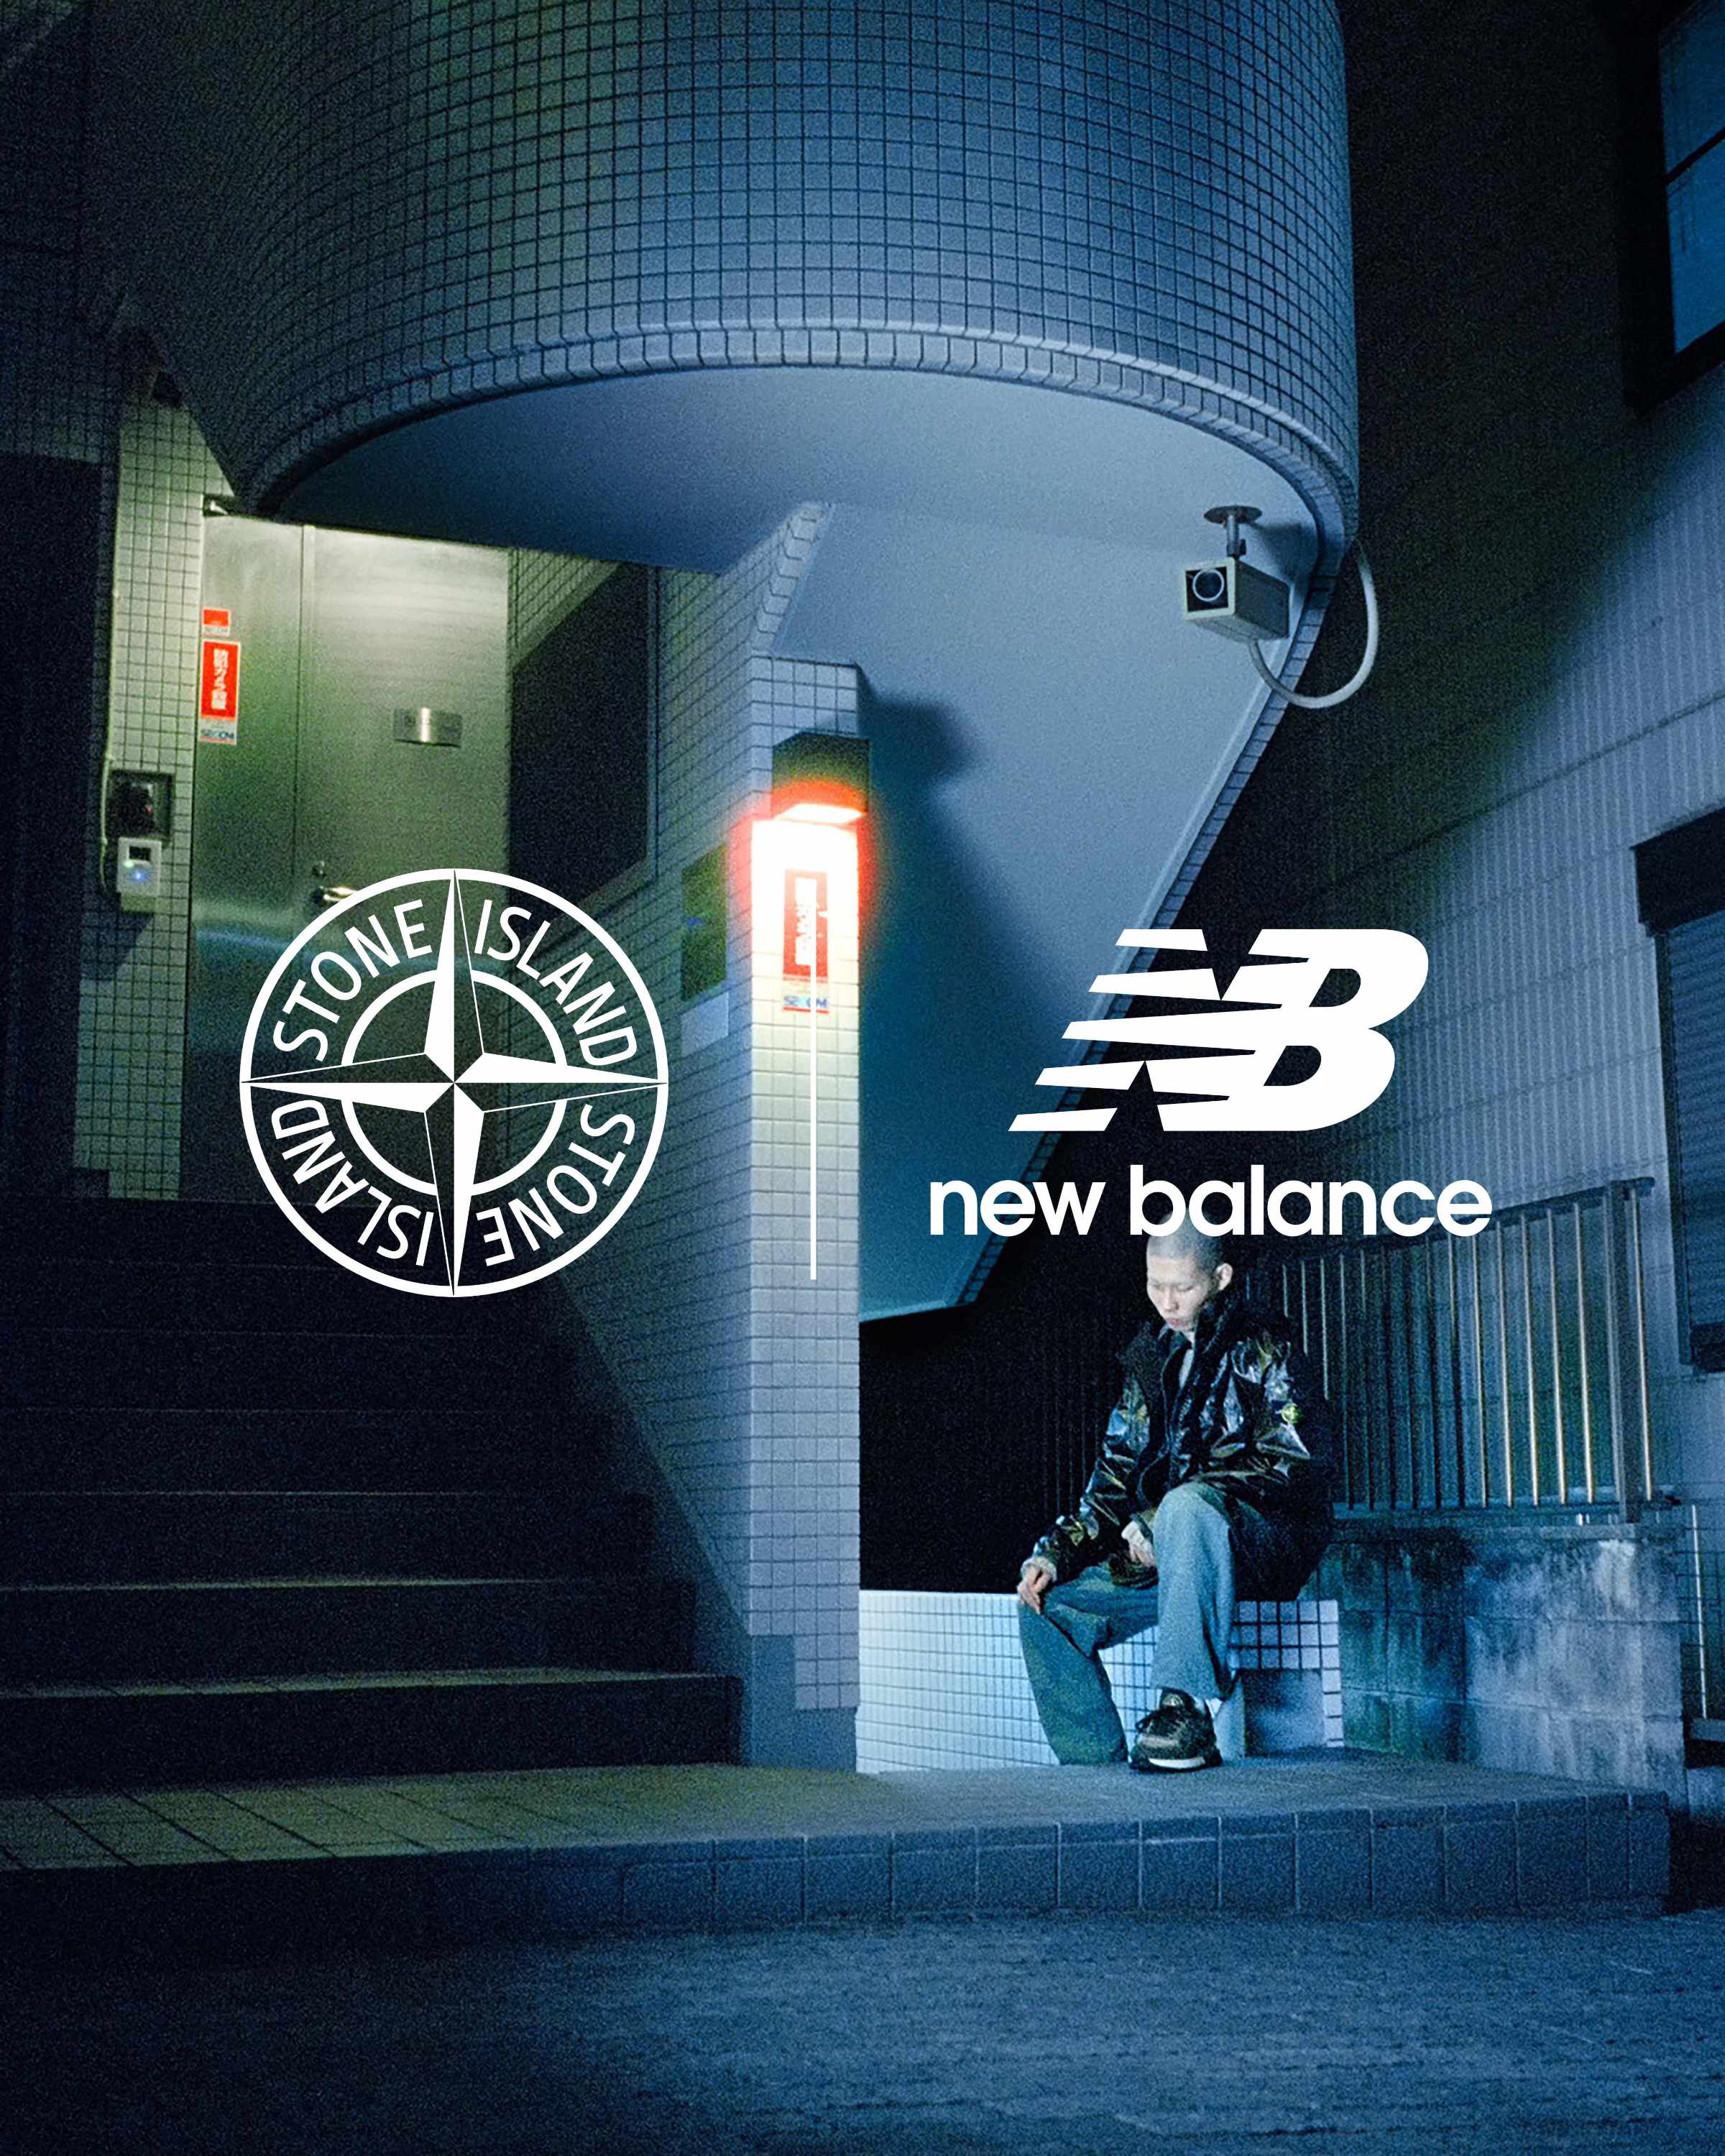 Stone Island's New Balance 574 legacy sneaker